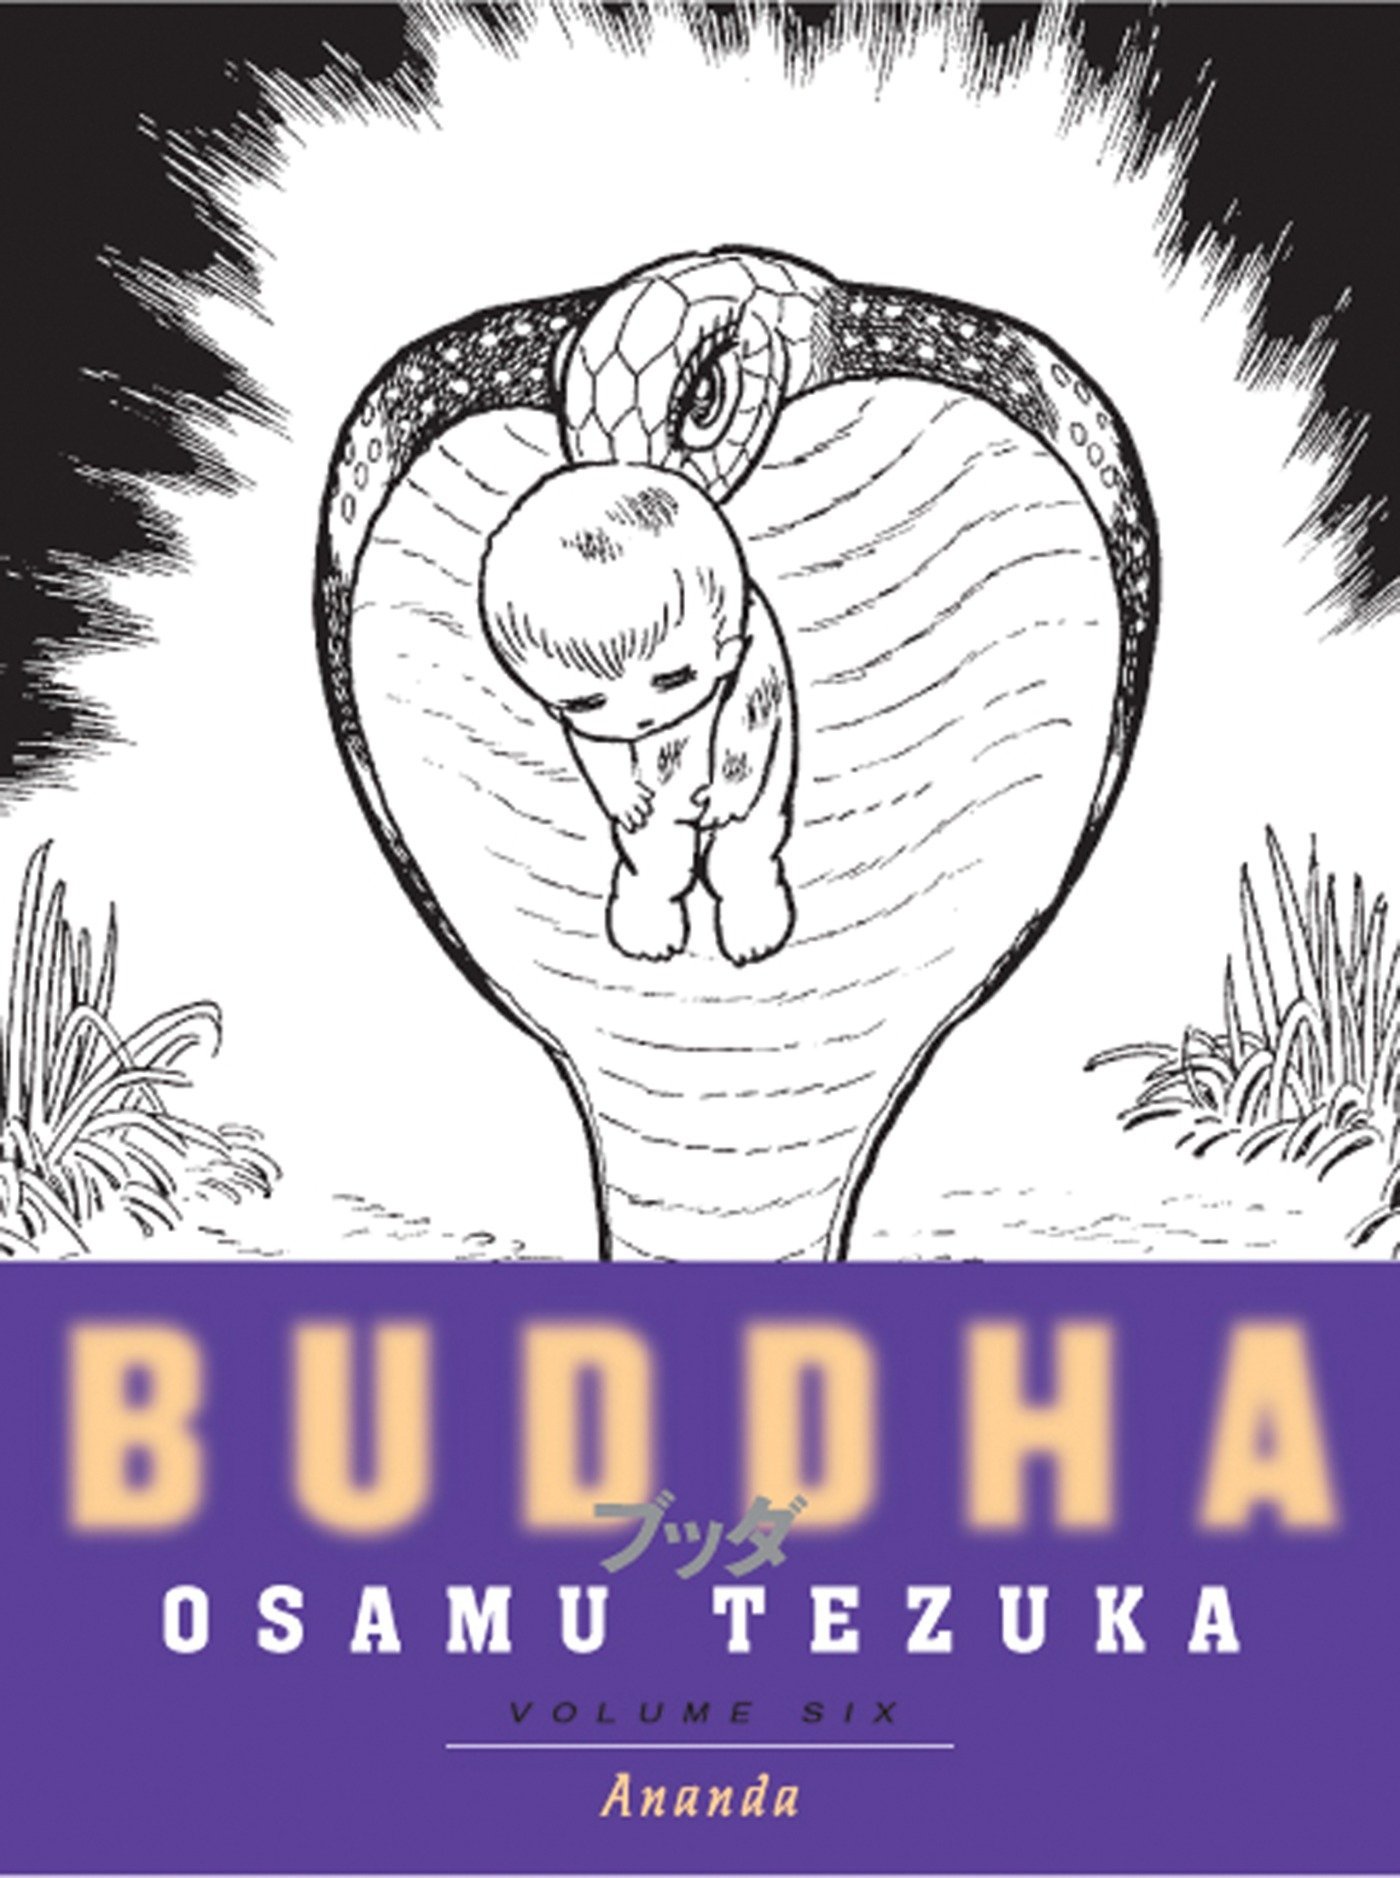 Buddha Vol. 6 - Ananda